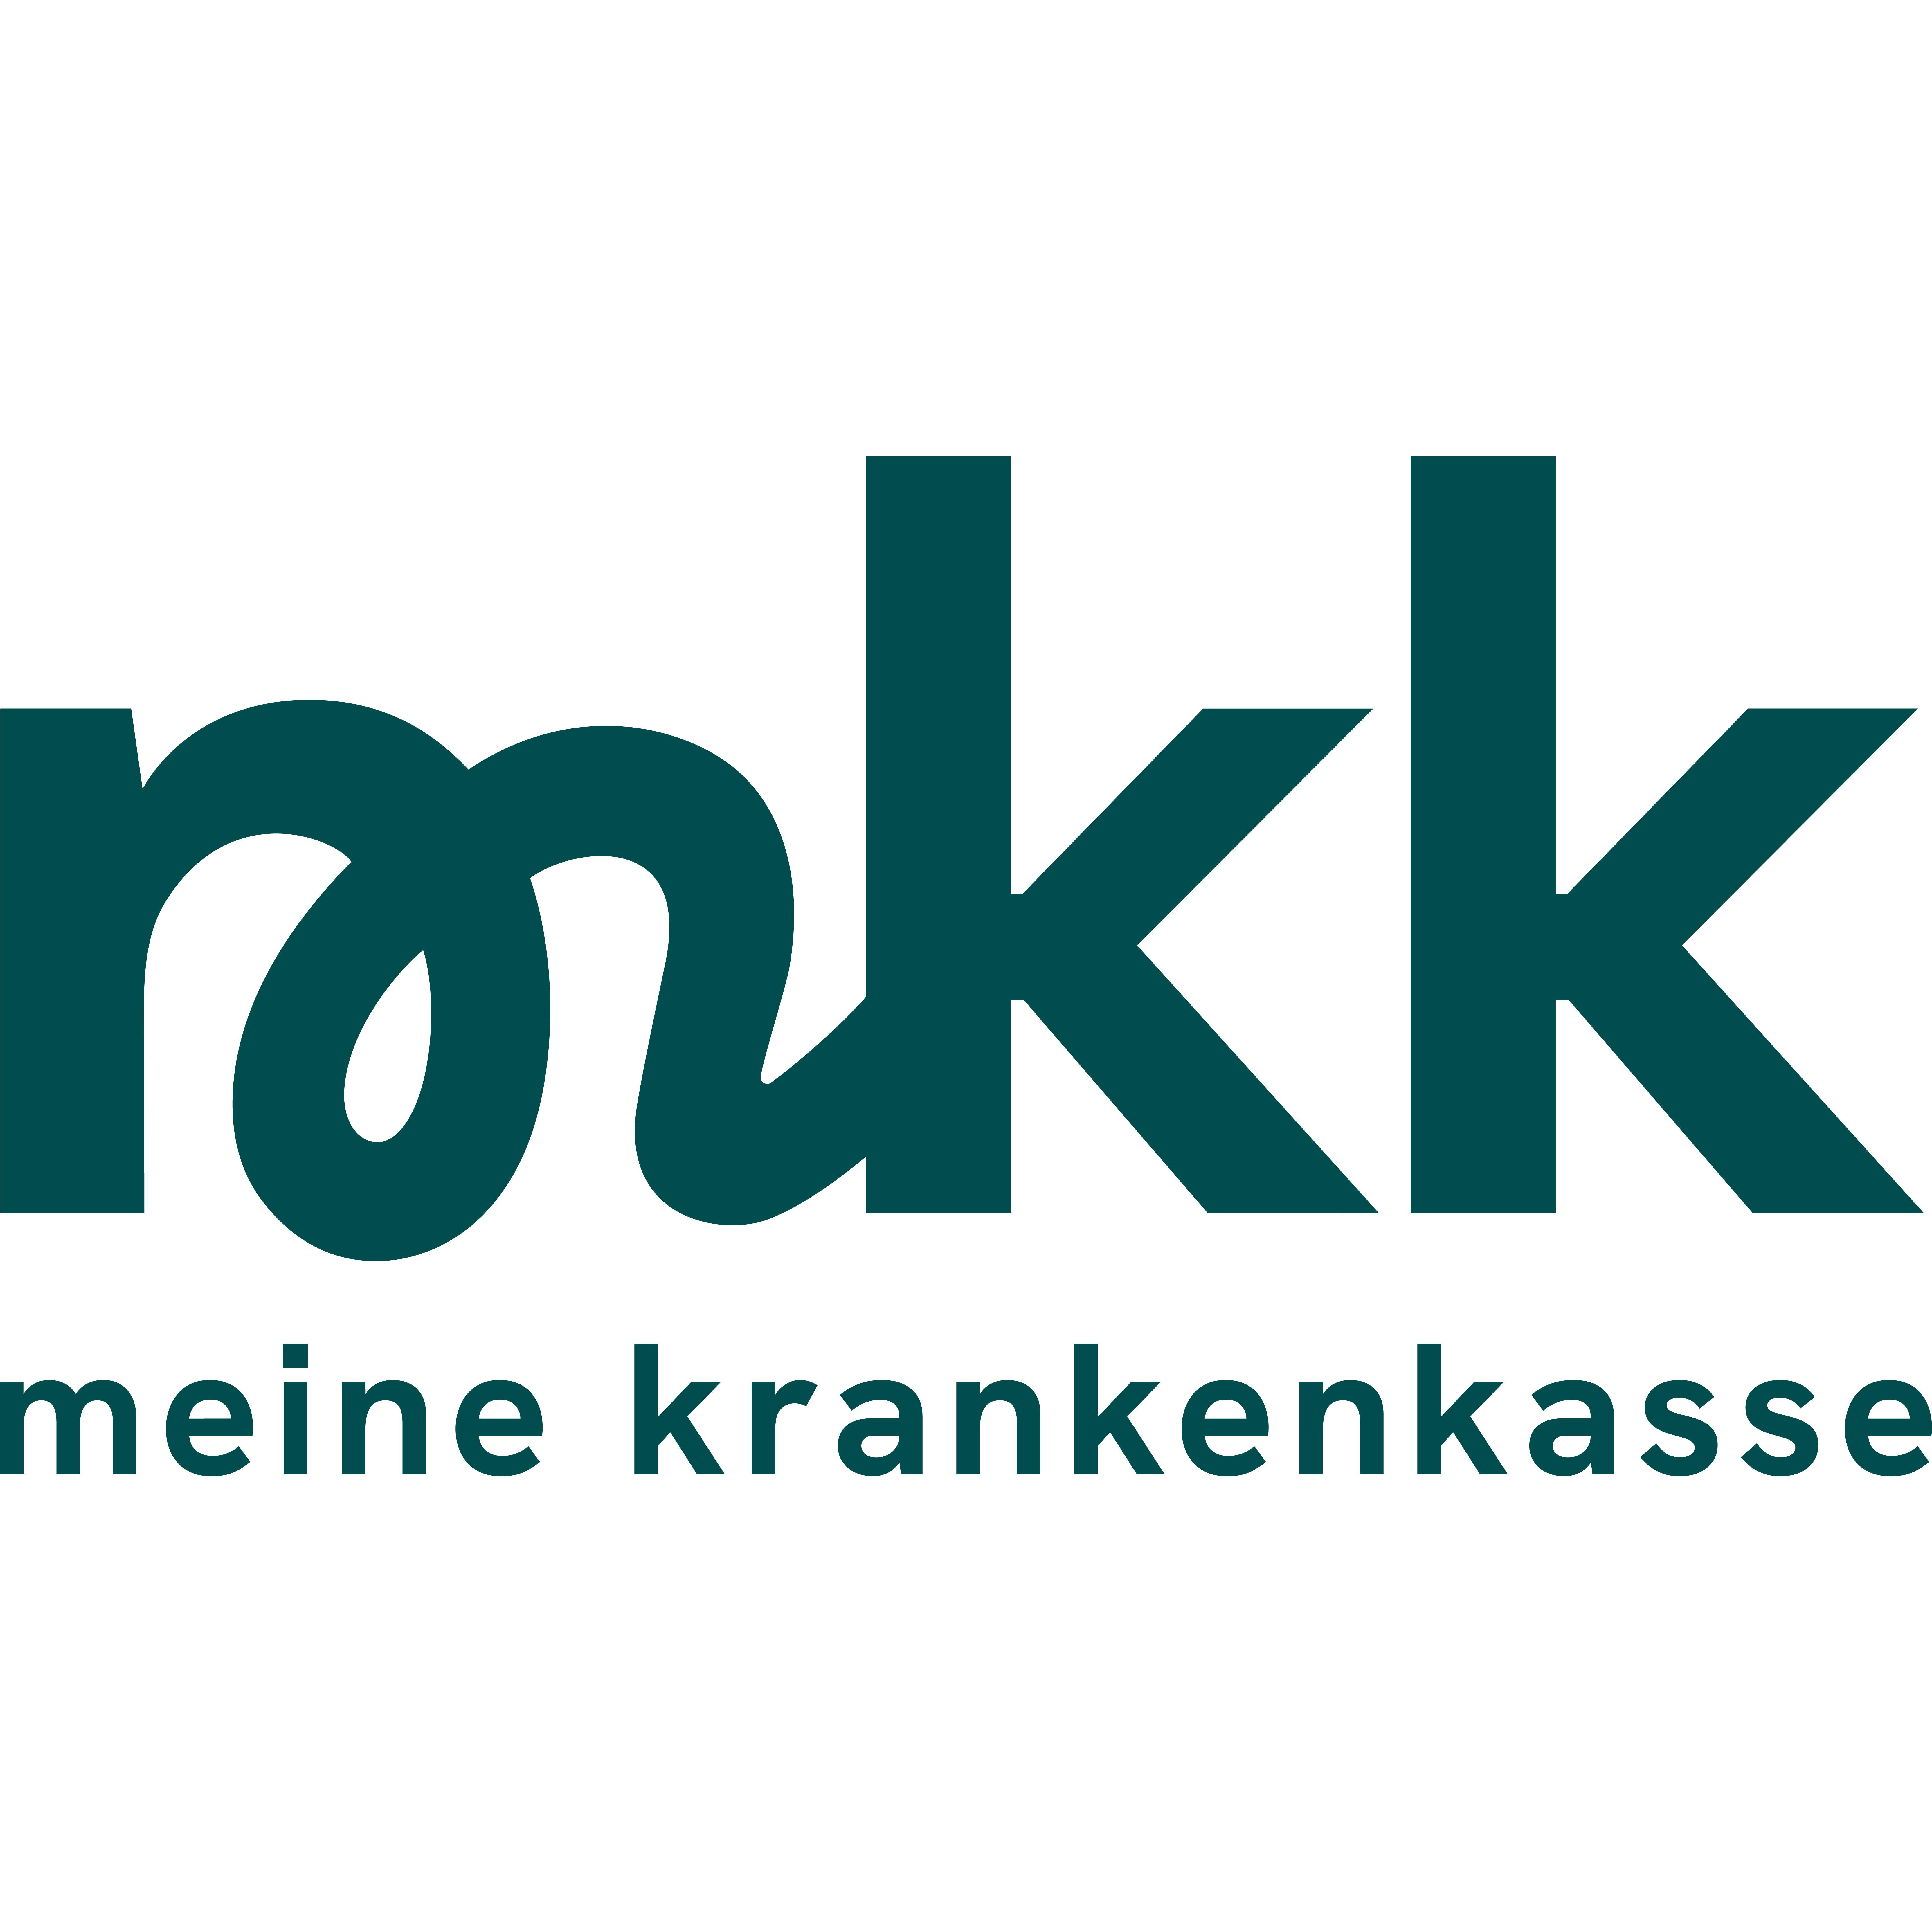 mkk - meine krankenkasse in Kornwestheim - Logo